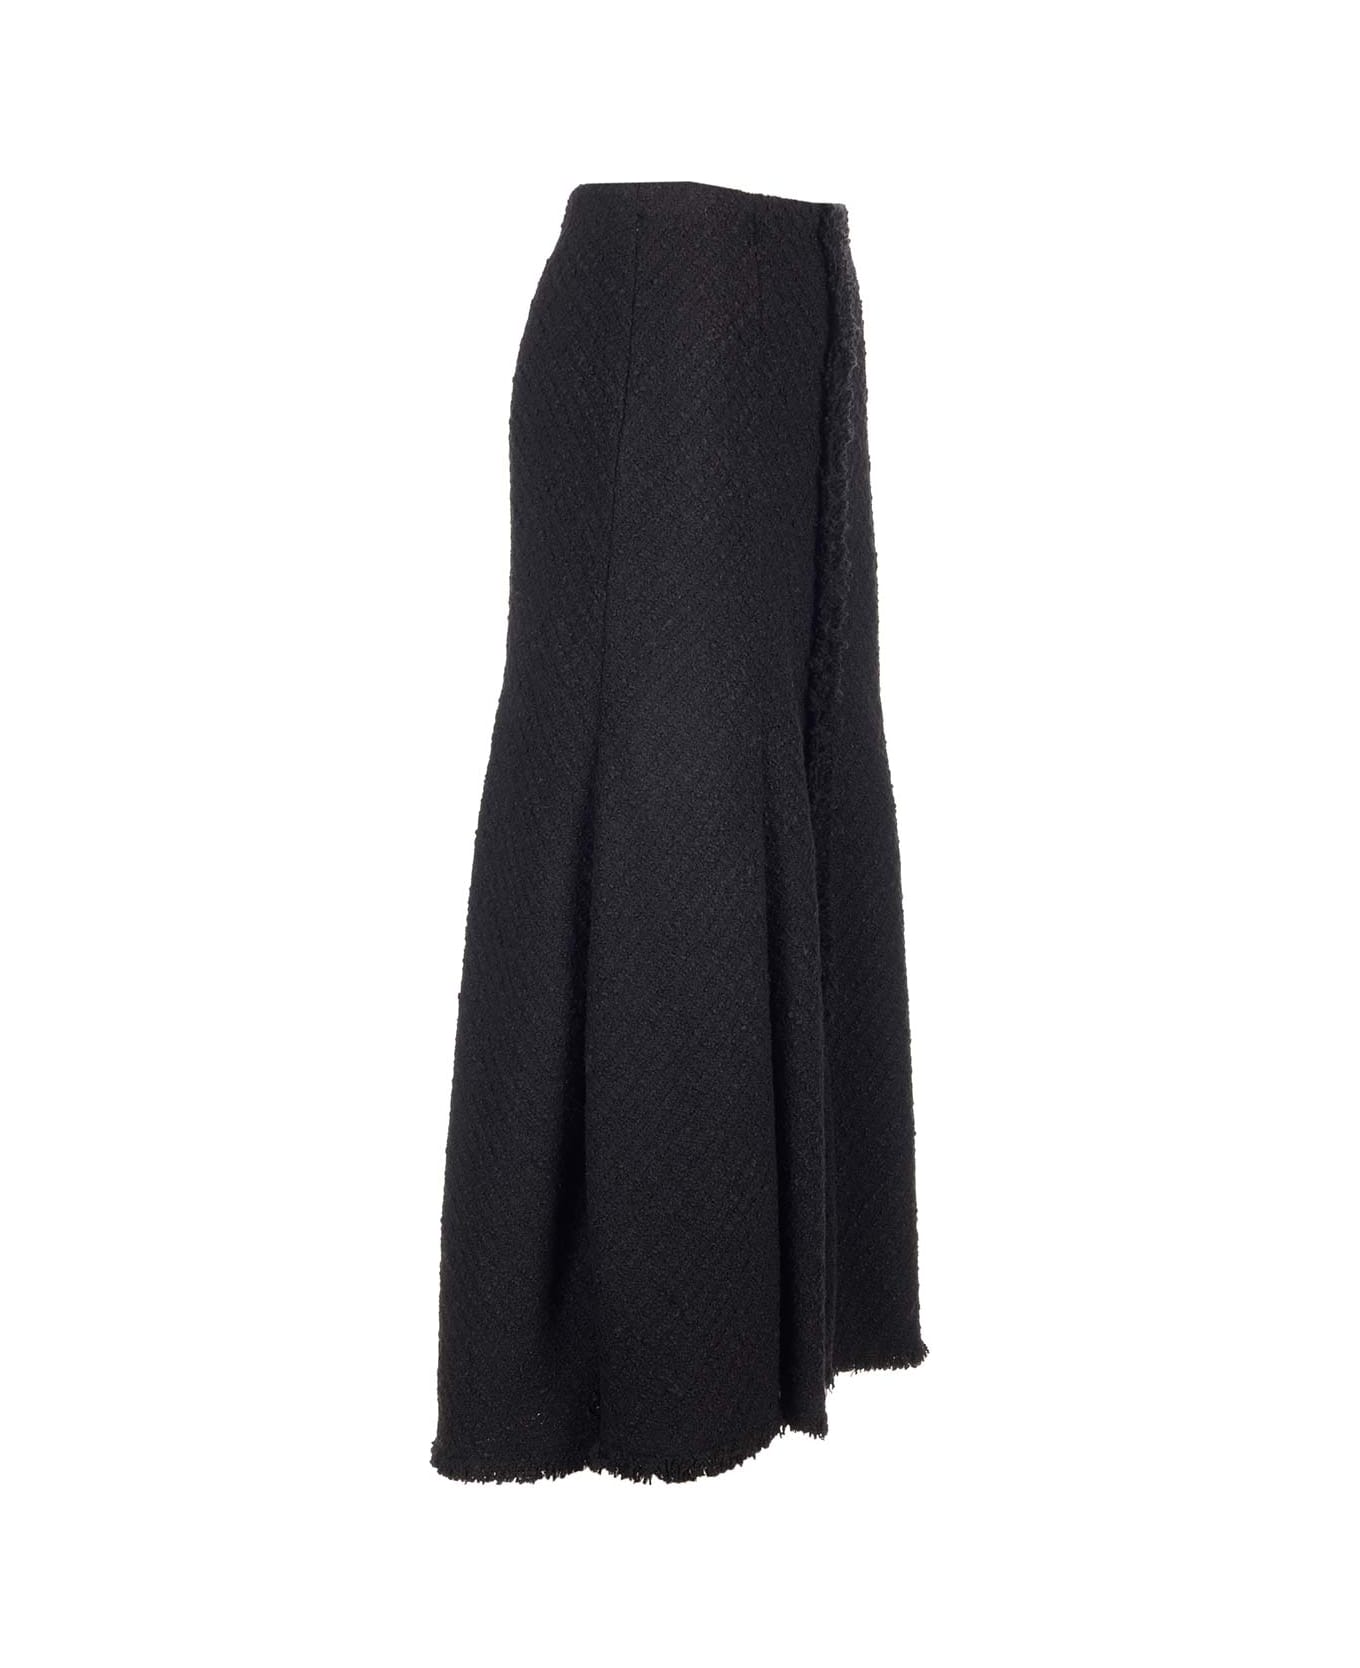 Del Core Tweed Midi Skirt - Black